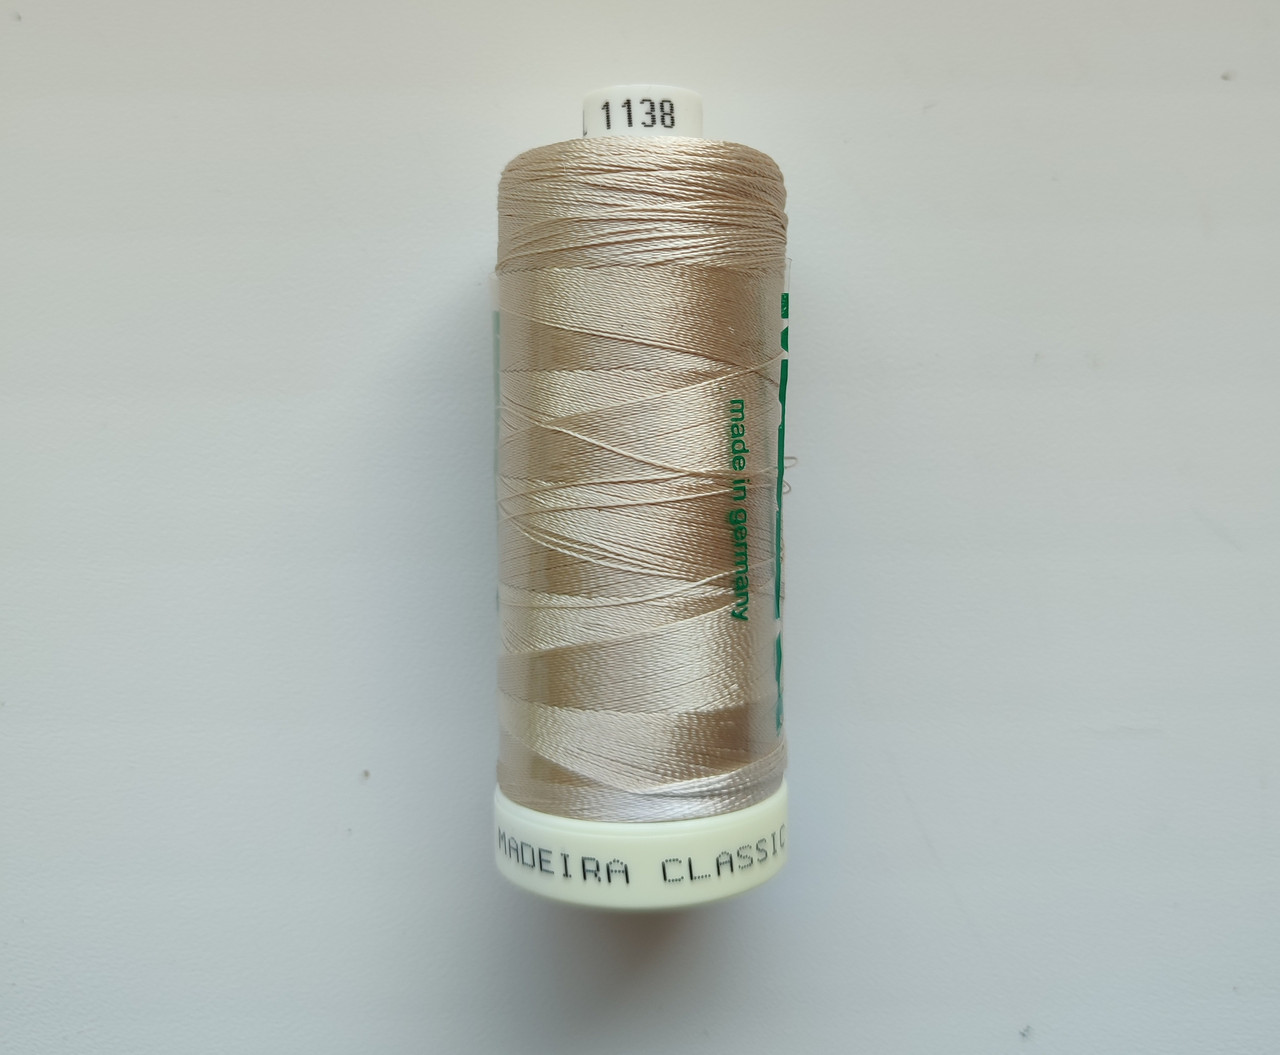 Нитки для машинної  вишивки 
Madeira Classic №40. 
Бежевий колір ( арт 1138 )
по 1000 м.
Віскоза